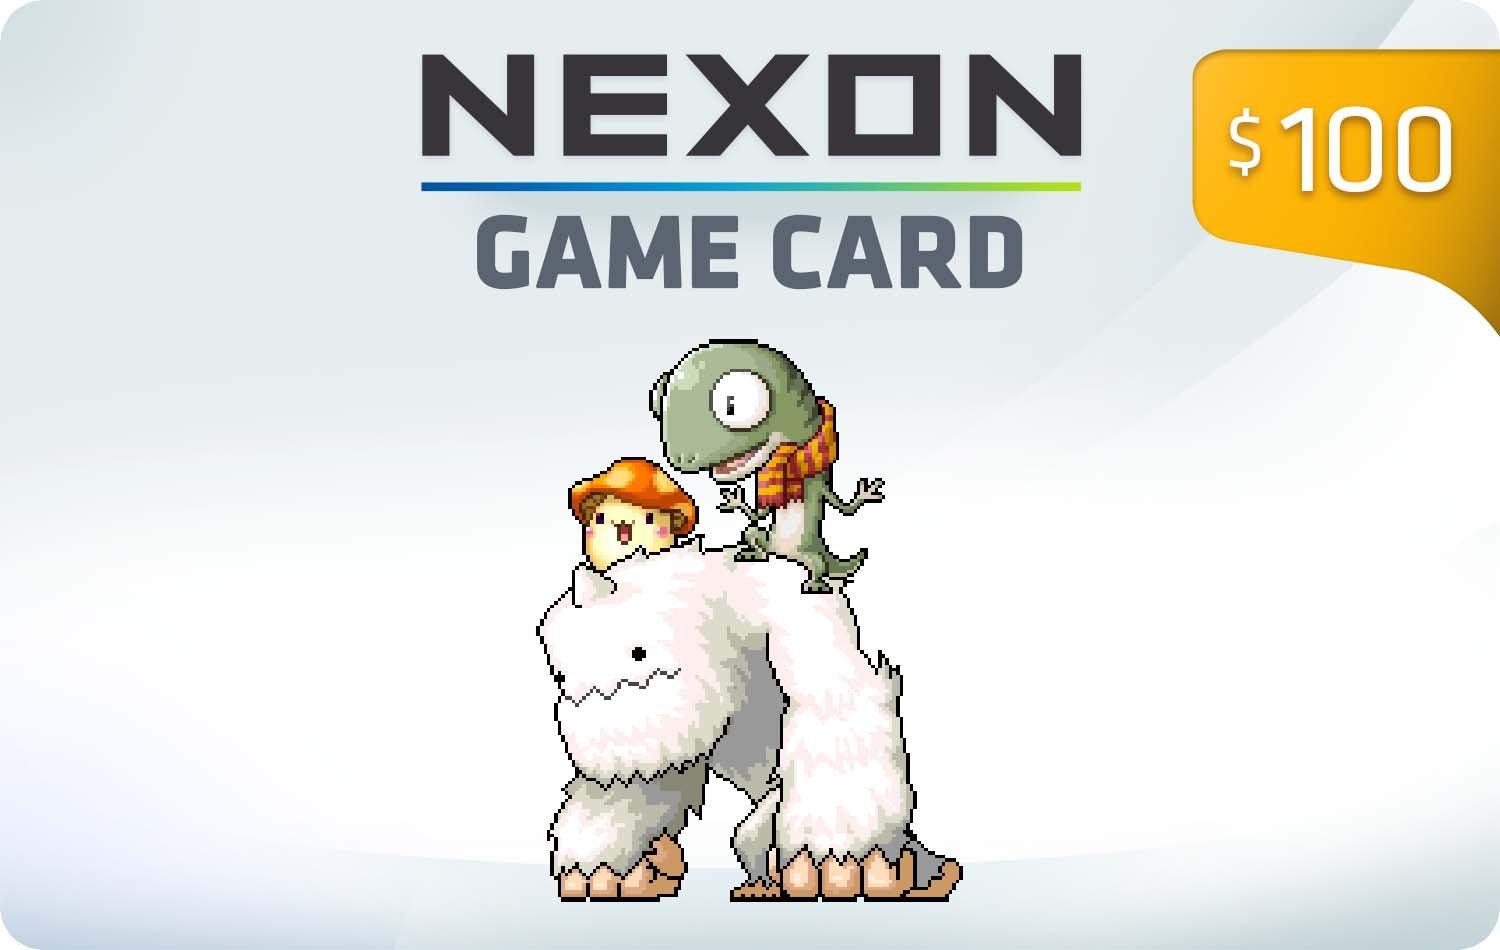 Nexon Game Card $100